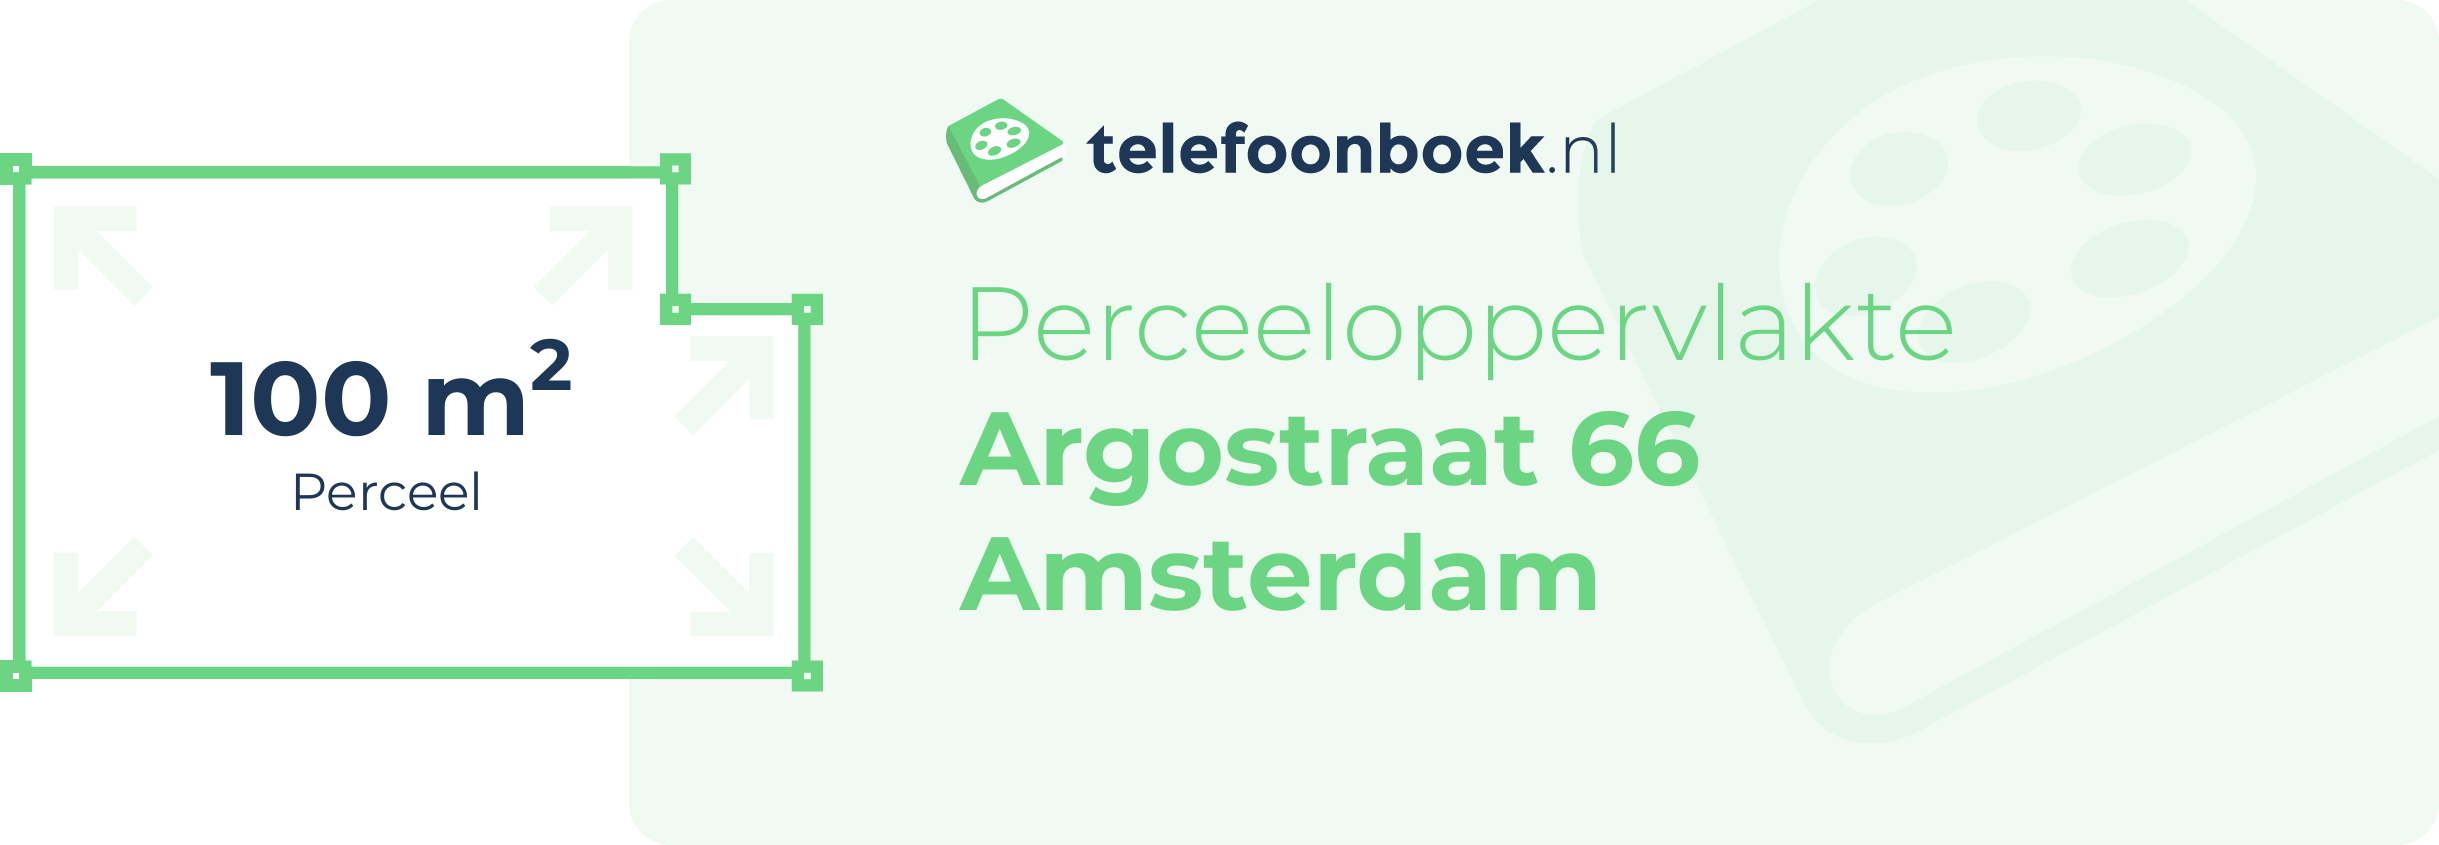 Perceeloppervlakte Argostraat 66 Amsterdam